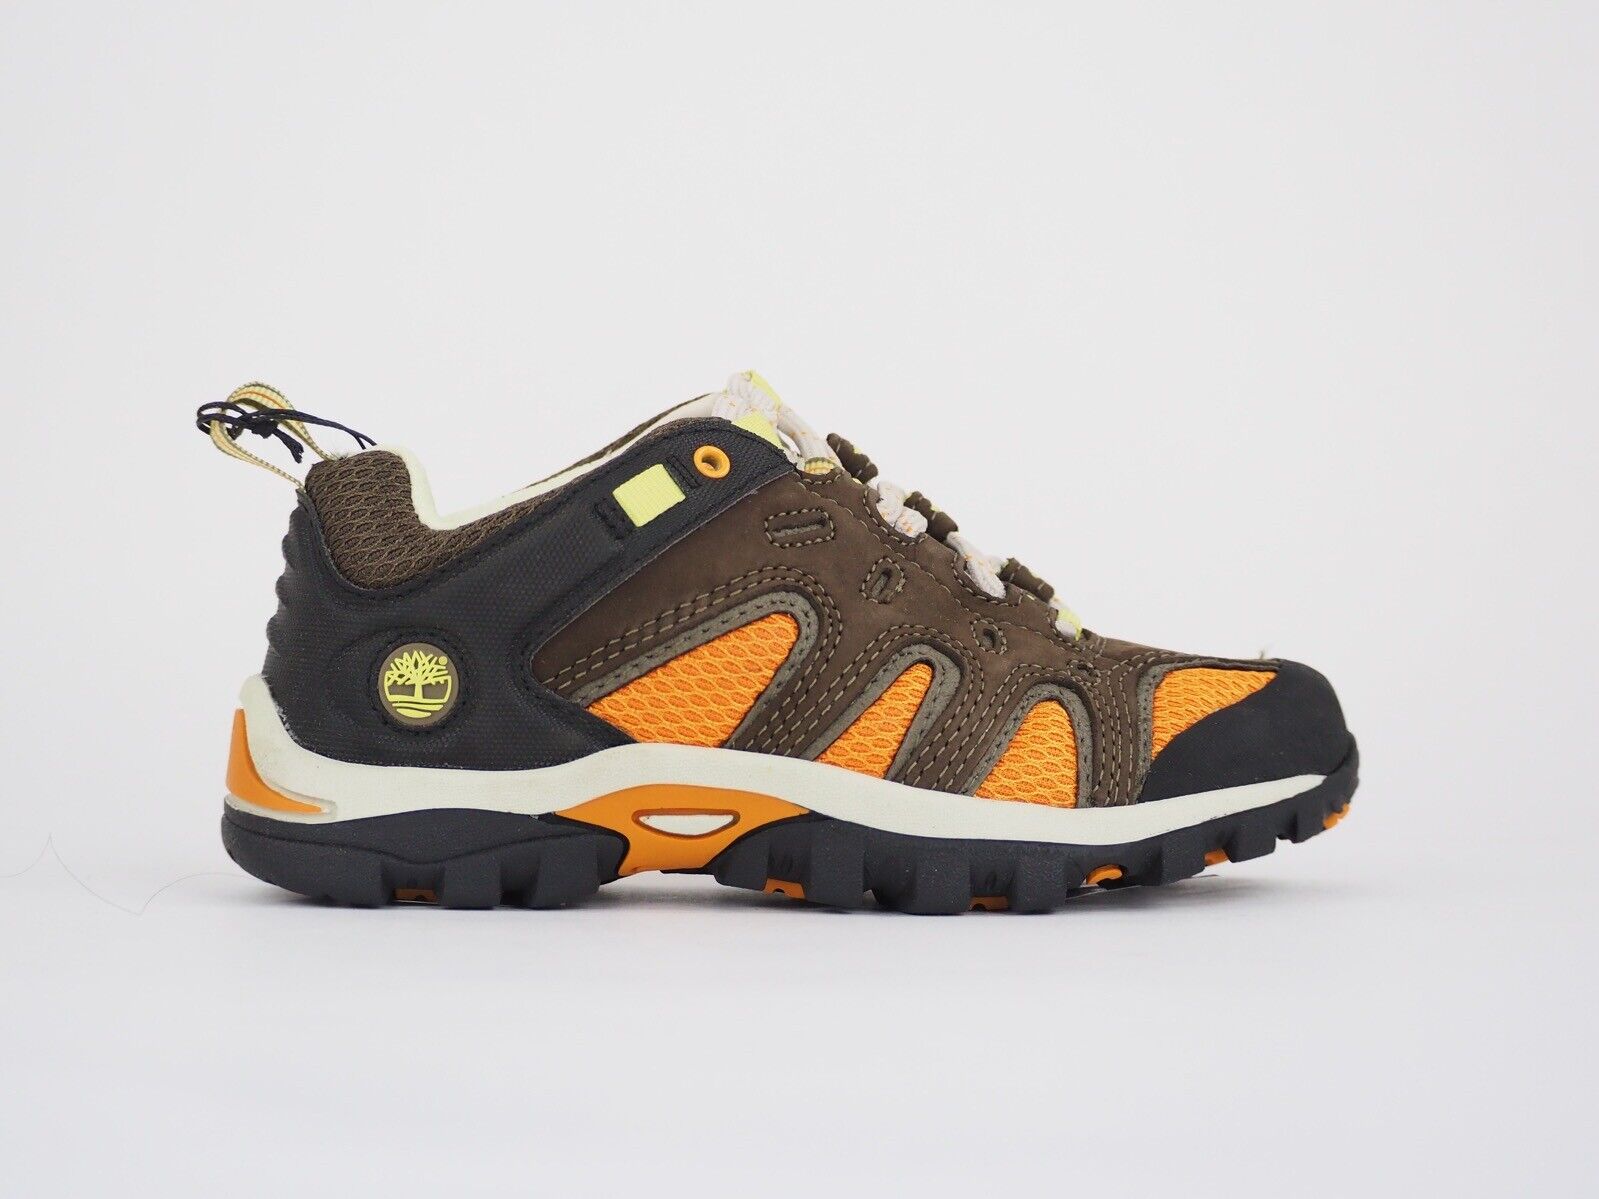 Boys Timberland Hypertrail Hiker 58710 Orange / Brown Leather Kids Walking Shoes - London Top Style